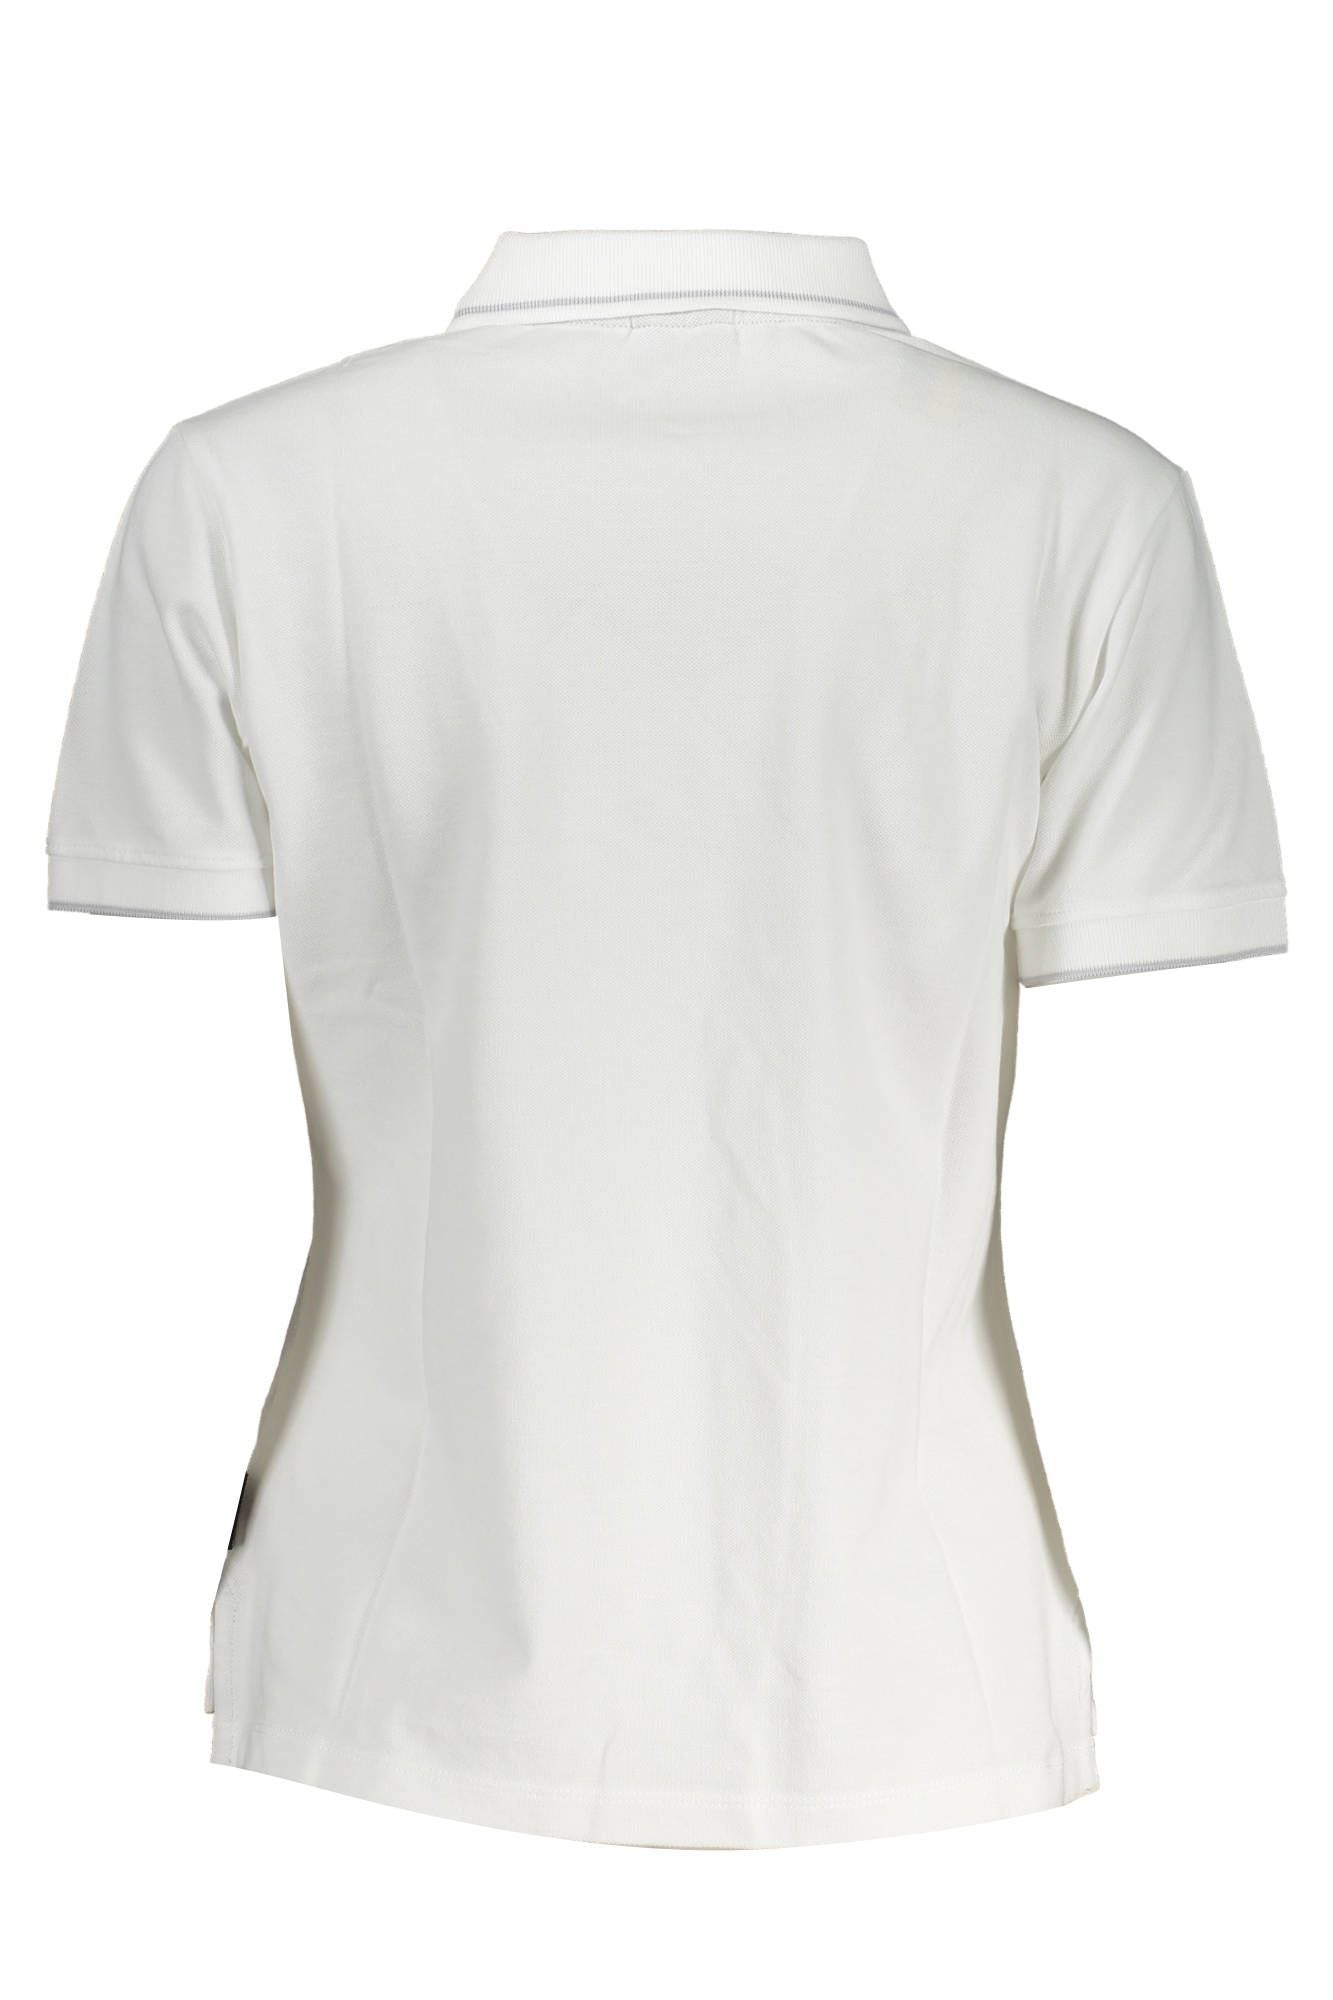 Napapijri  White Cotton Polo Shirt